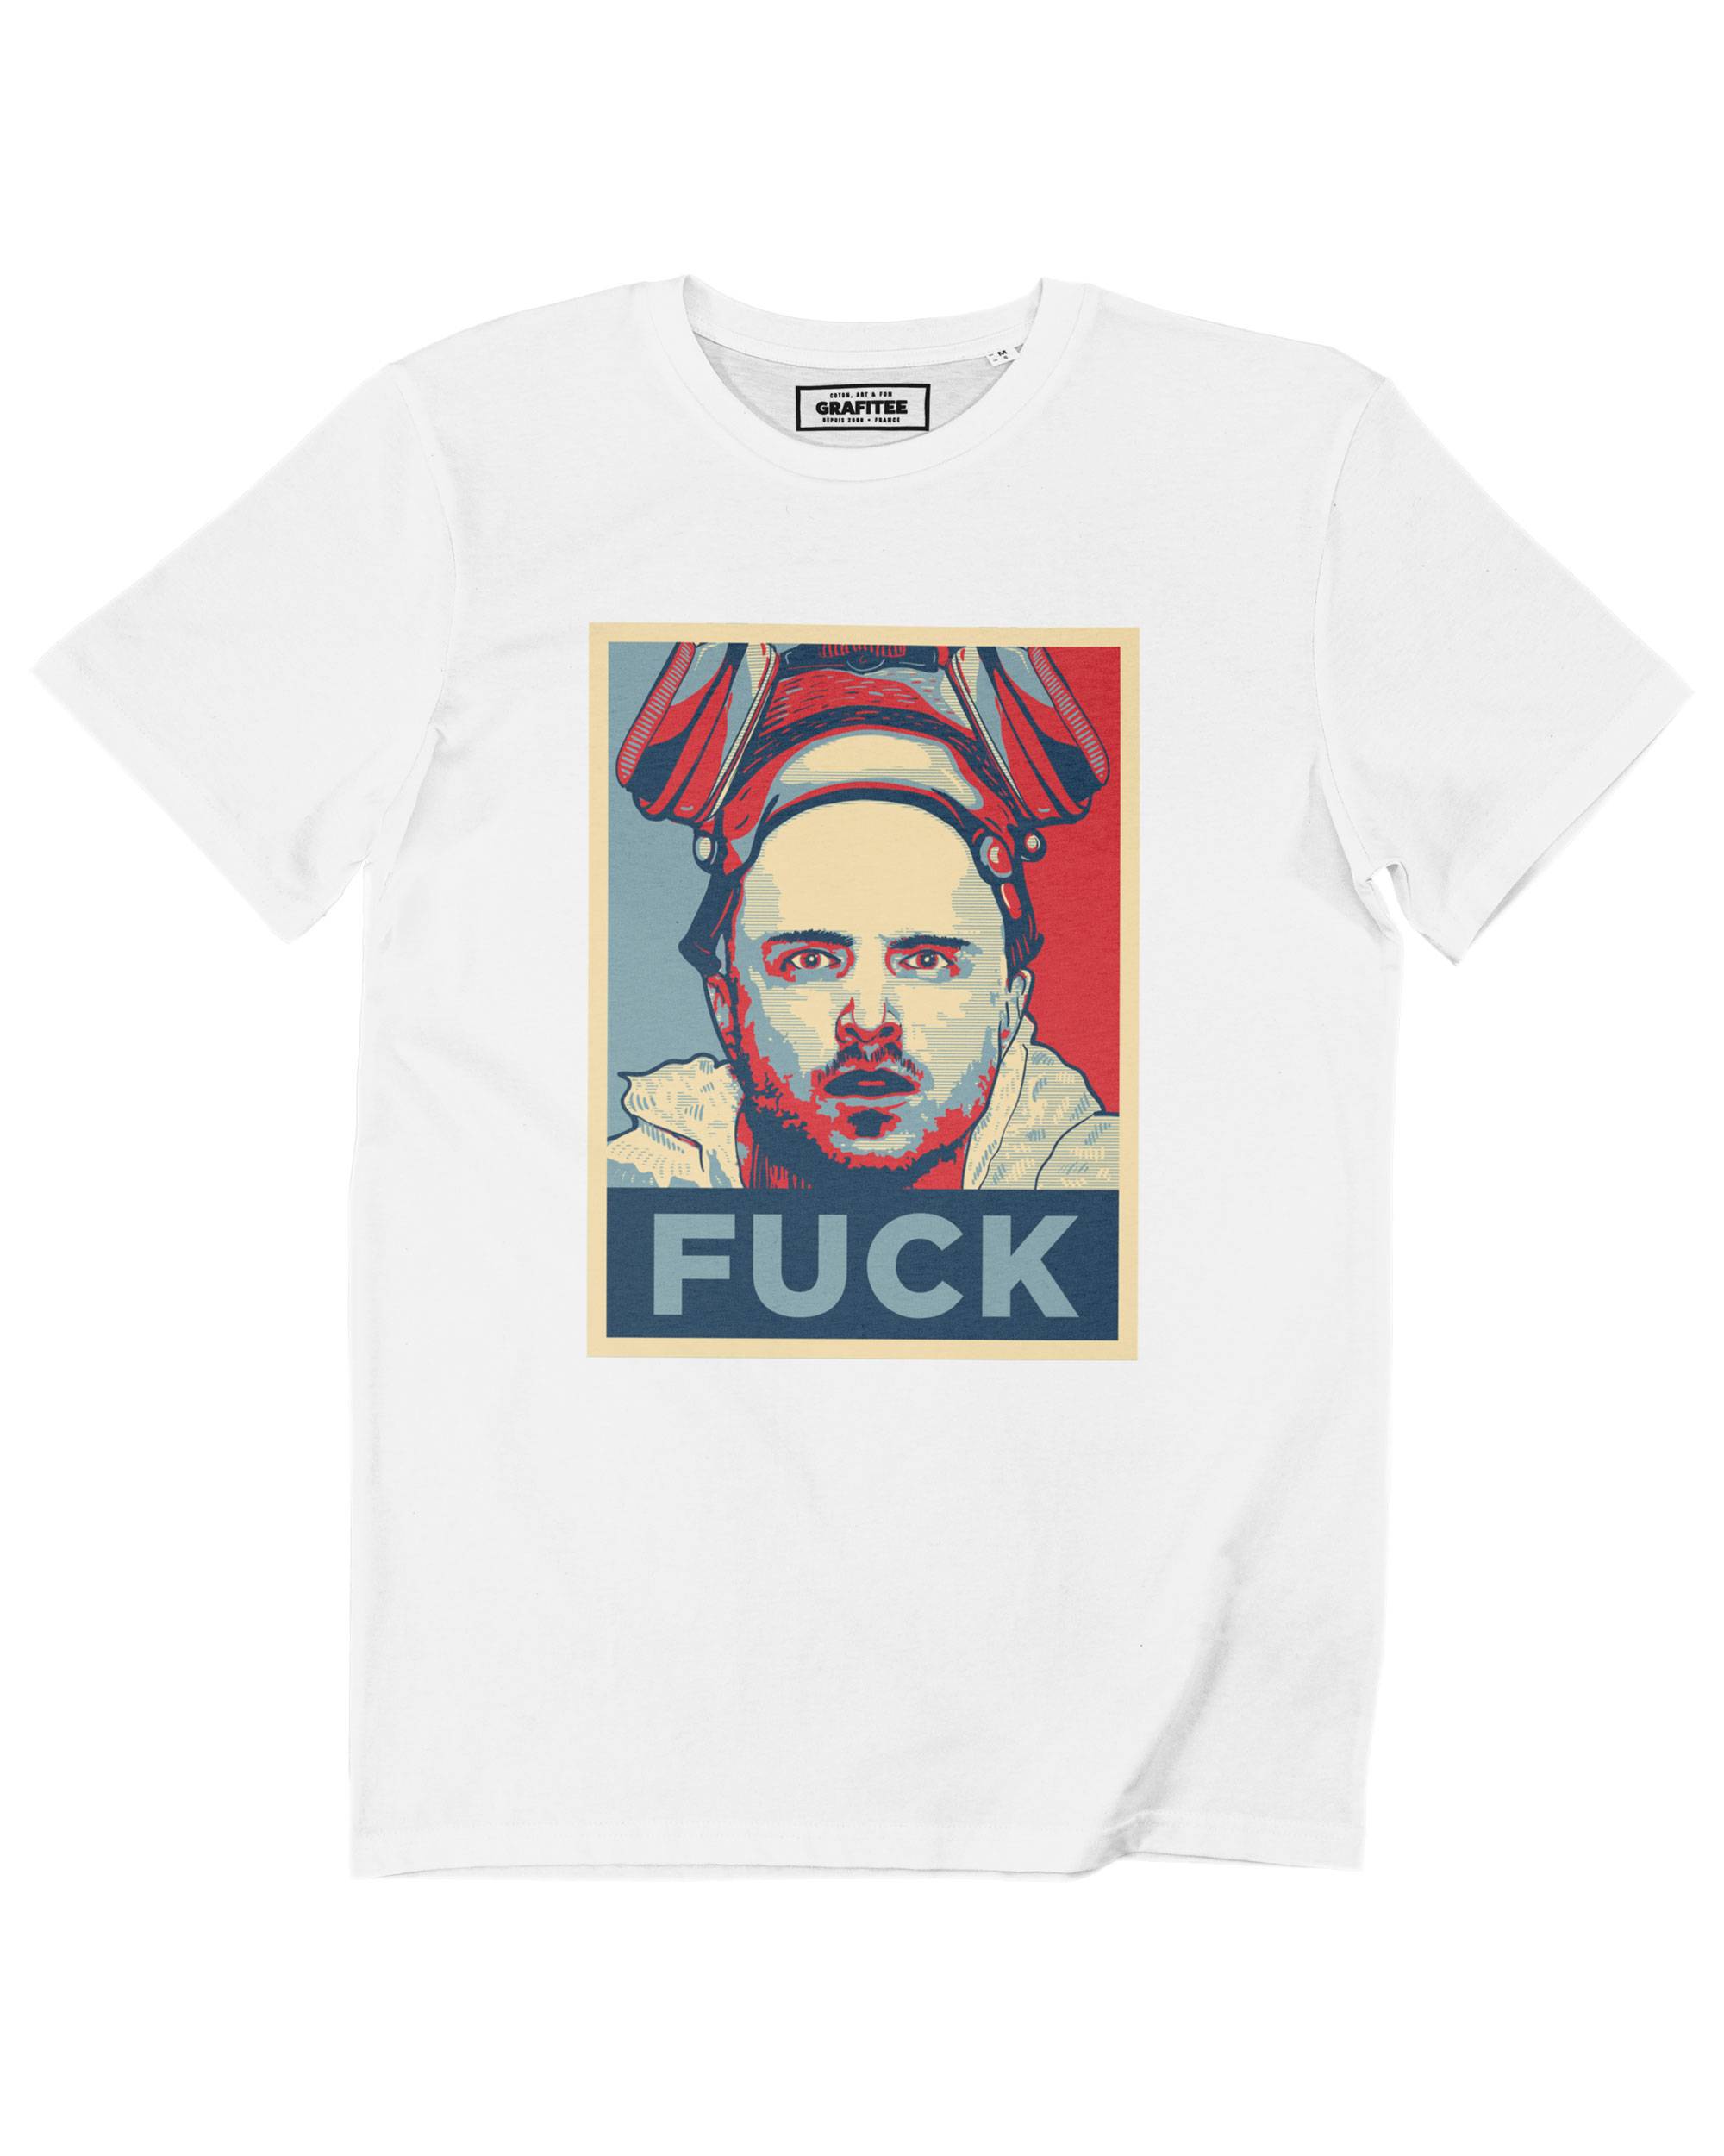 T-shirt Jesse Fuck Grafitee